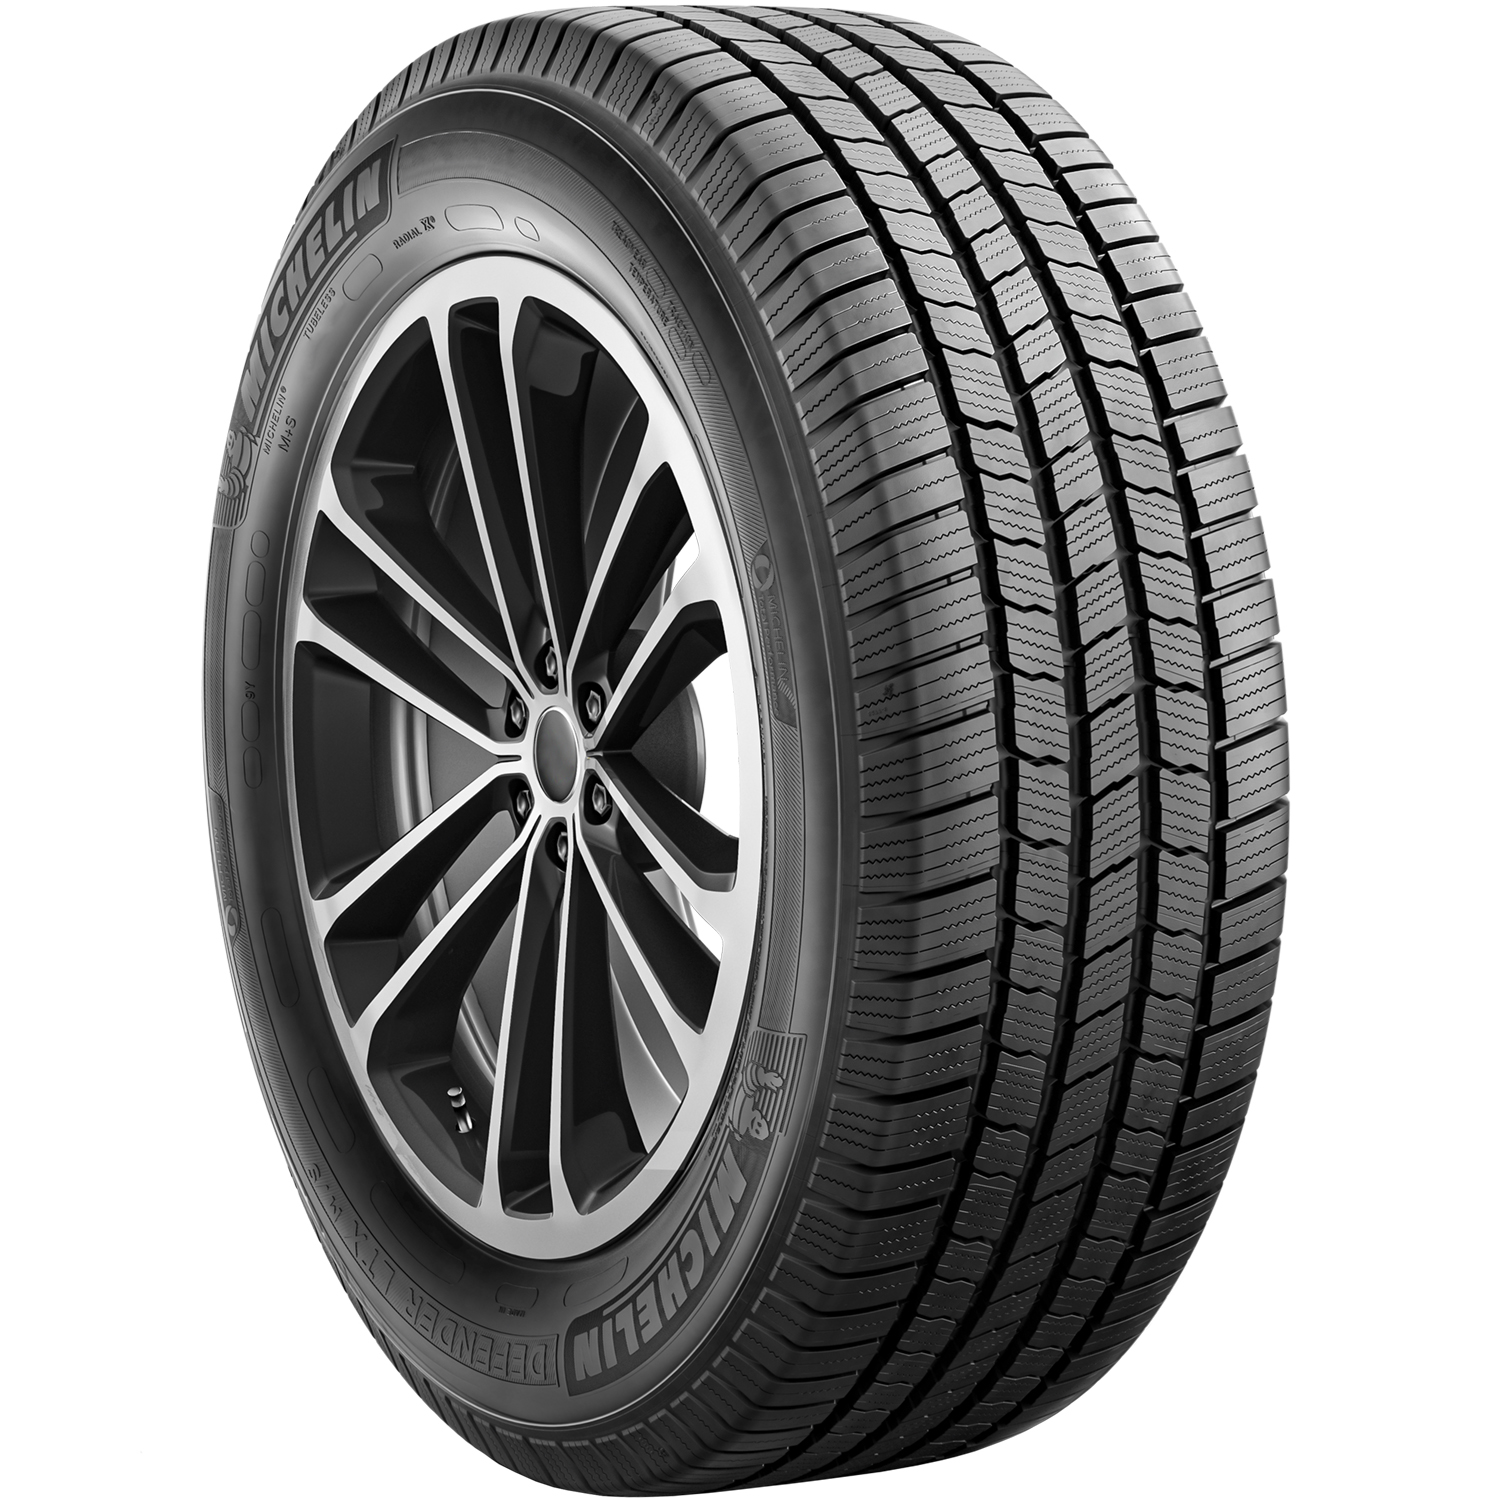 Michelin Defender LTX M/S All Season 225/65R17 102H Light Truck Tire - image 1 of 23